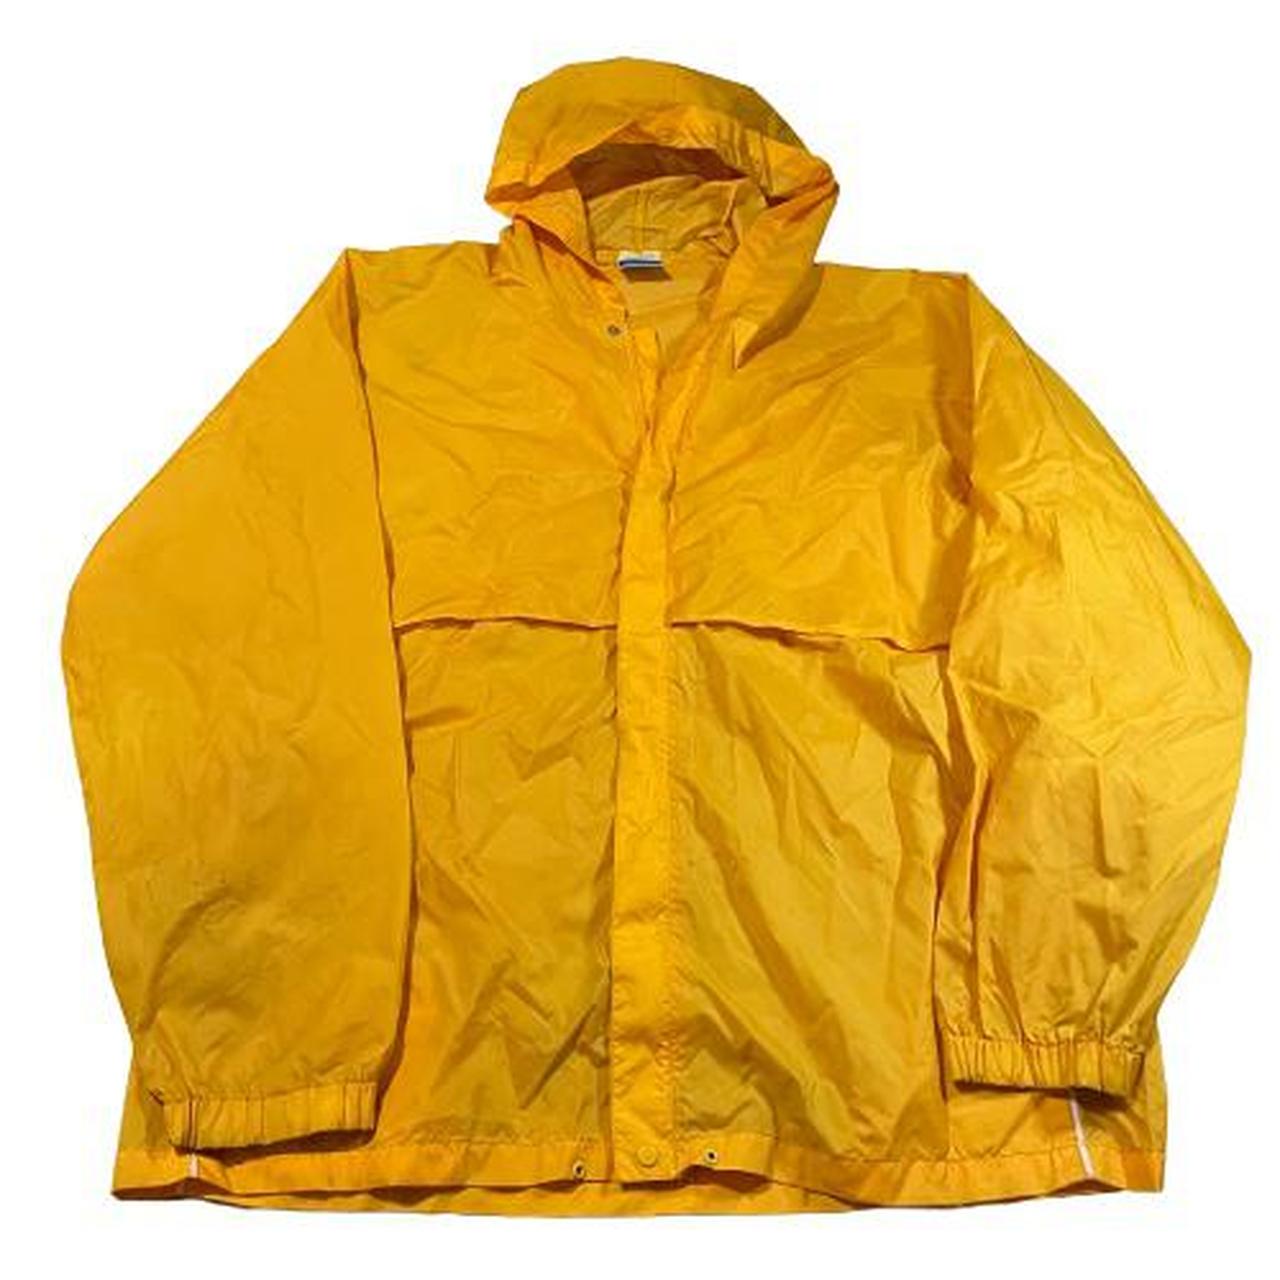 Vintage 80s Champion windbreaker rain jacket. Has... - Depop